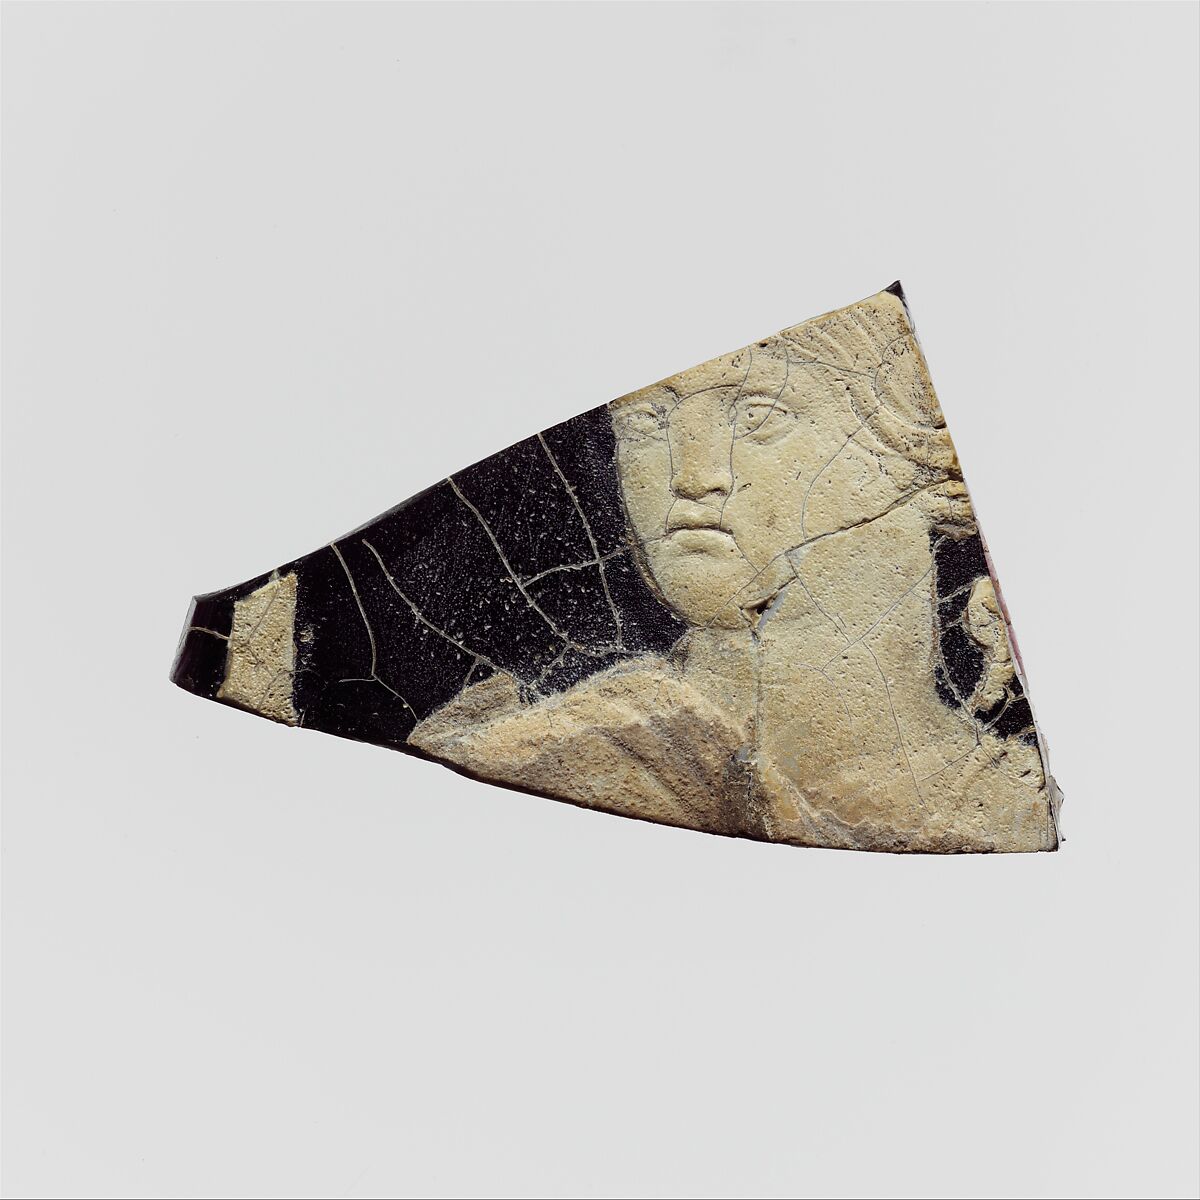 Glass cameo plaque fragment, Glass, Roman 